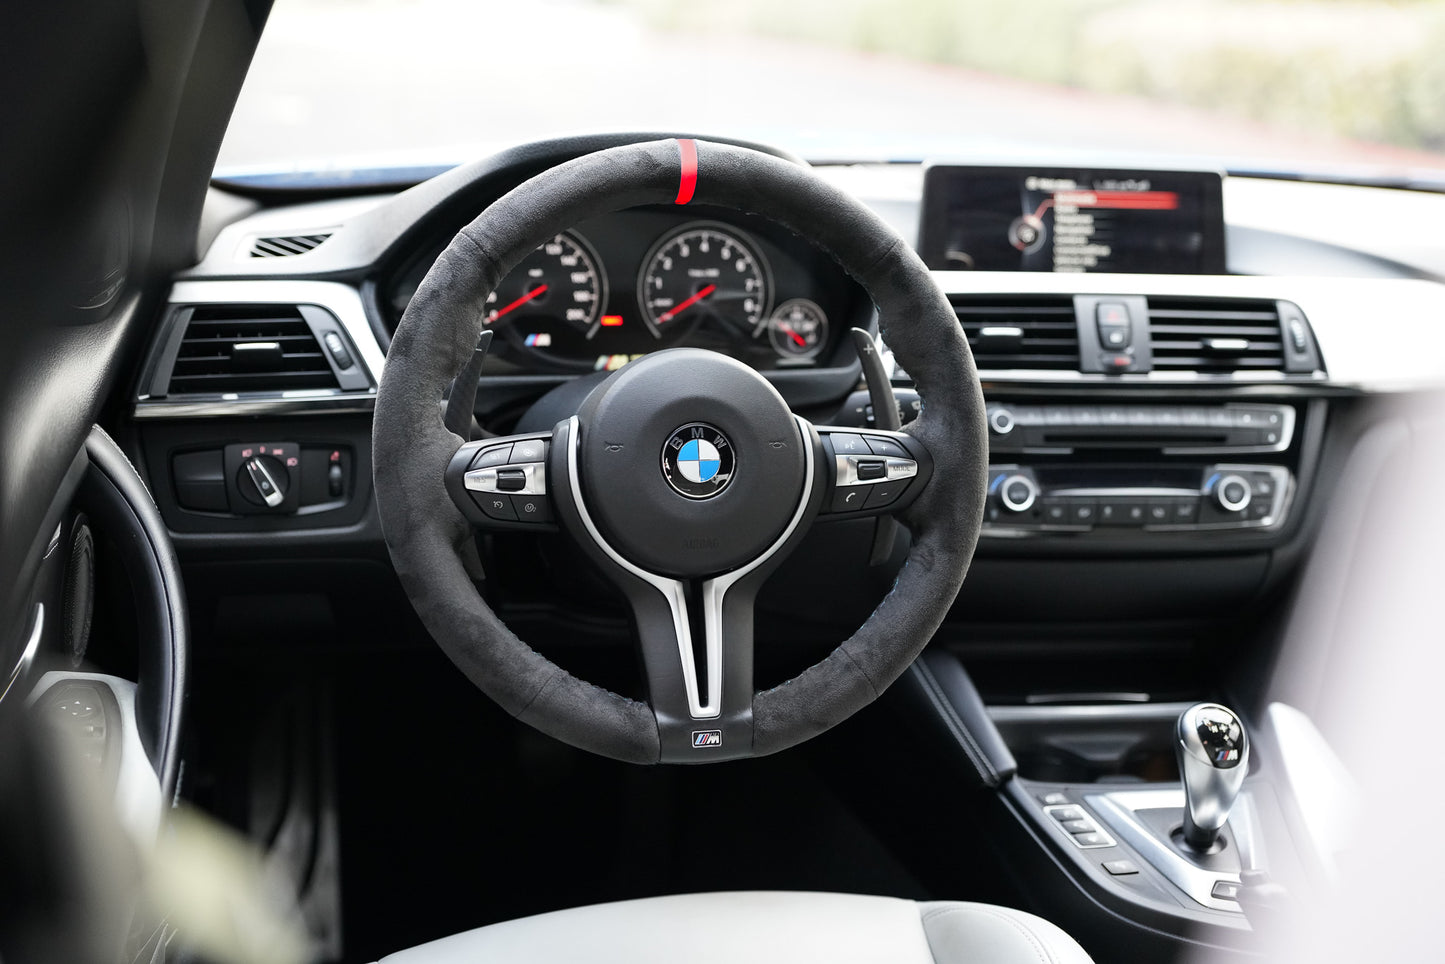 BMW F-Series Alcantara Suede Steering Wheel Cover DIY (Red Stripe) - iCBL